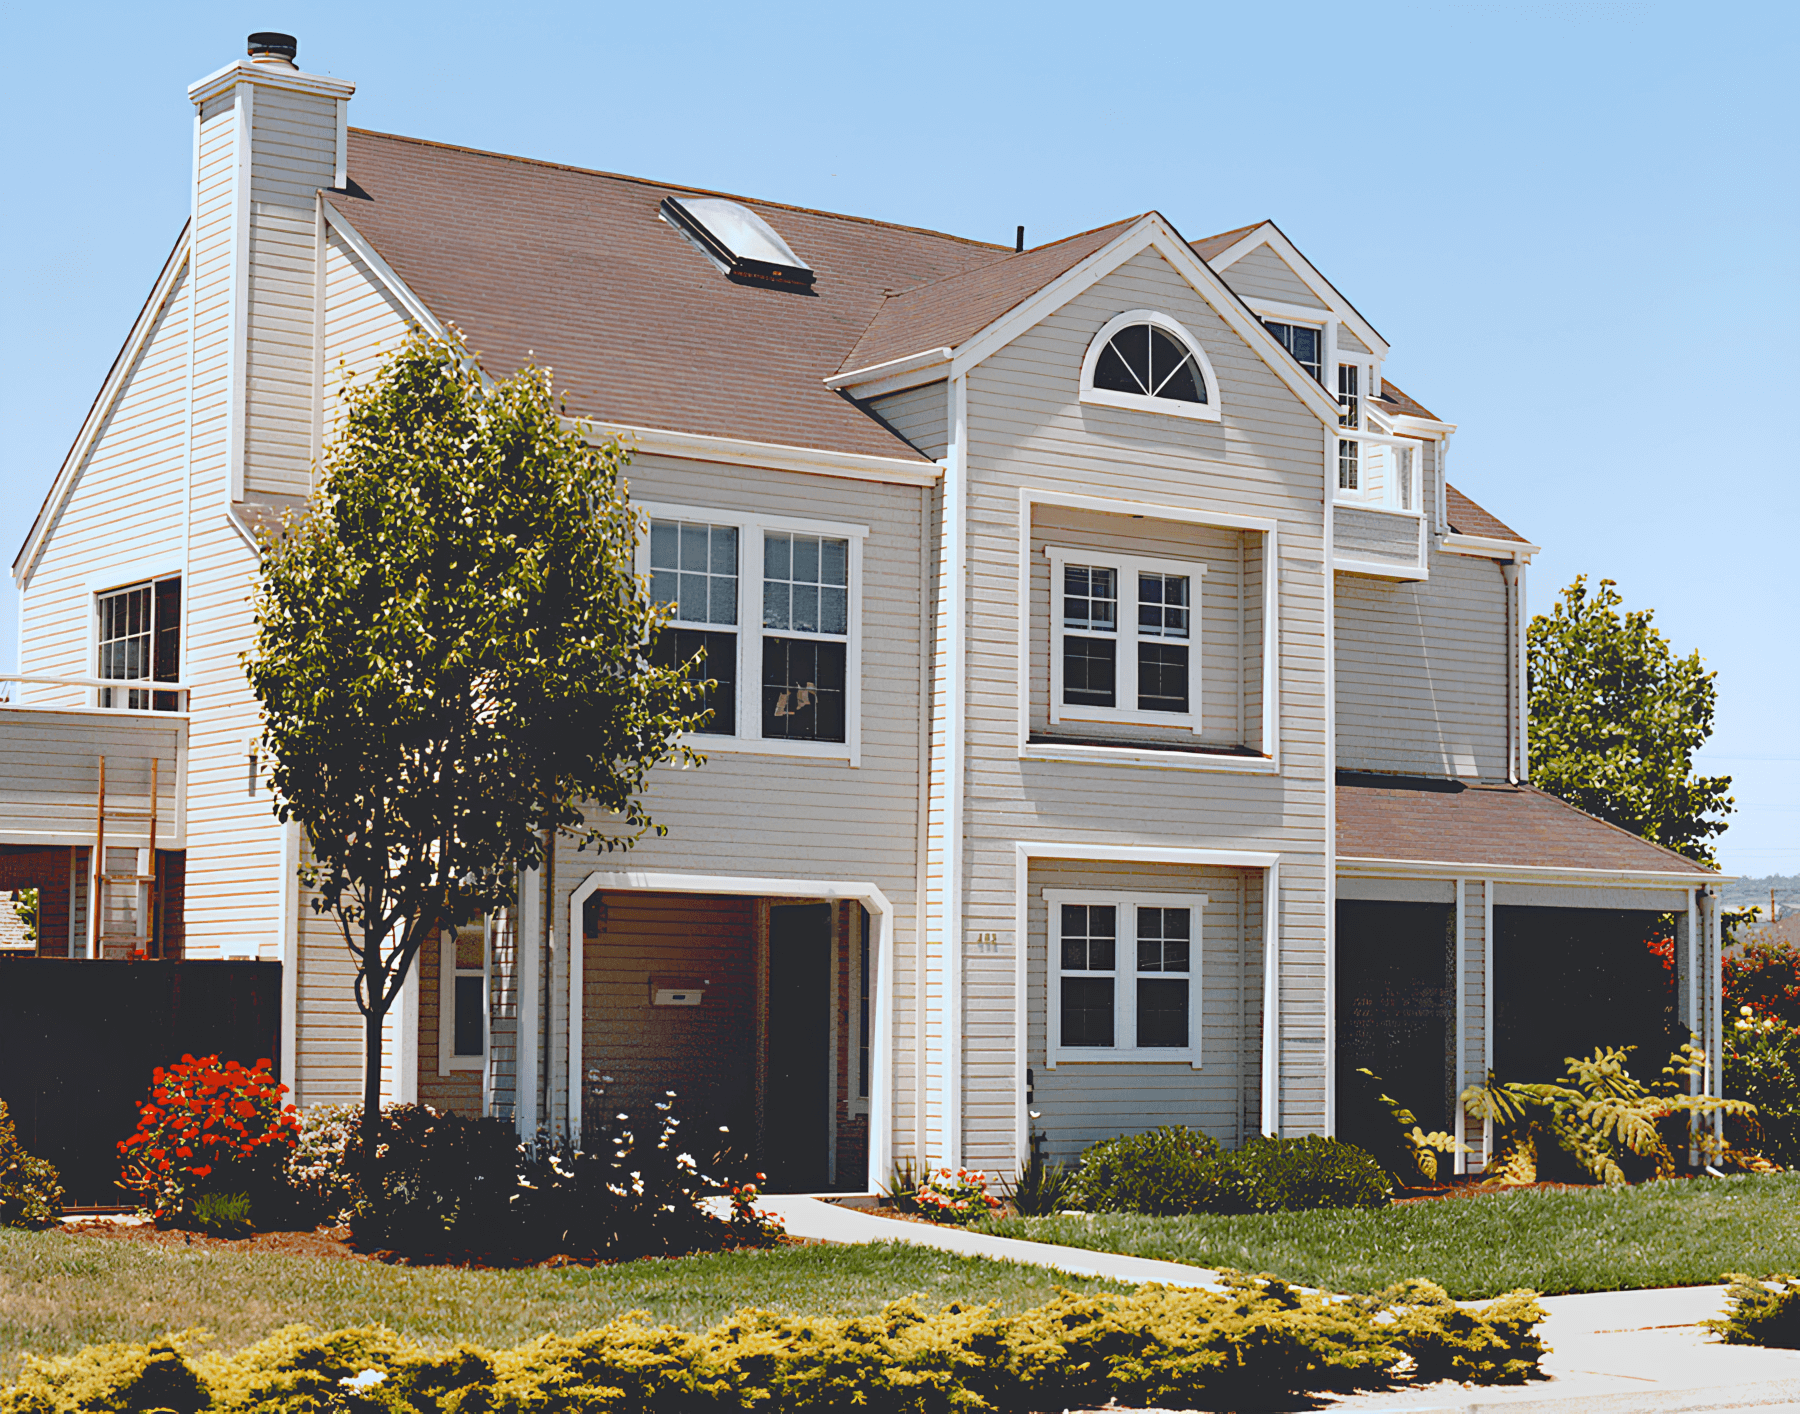 Image of Laguna Street house located in Santa Cruz, California, designed by architect Jeff Finsand.